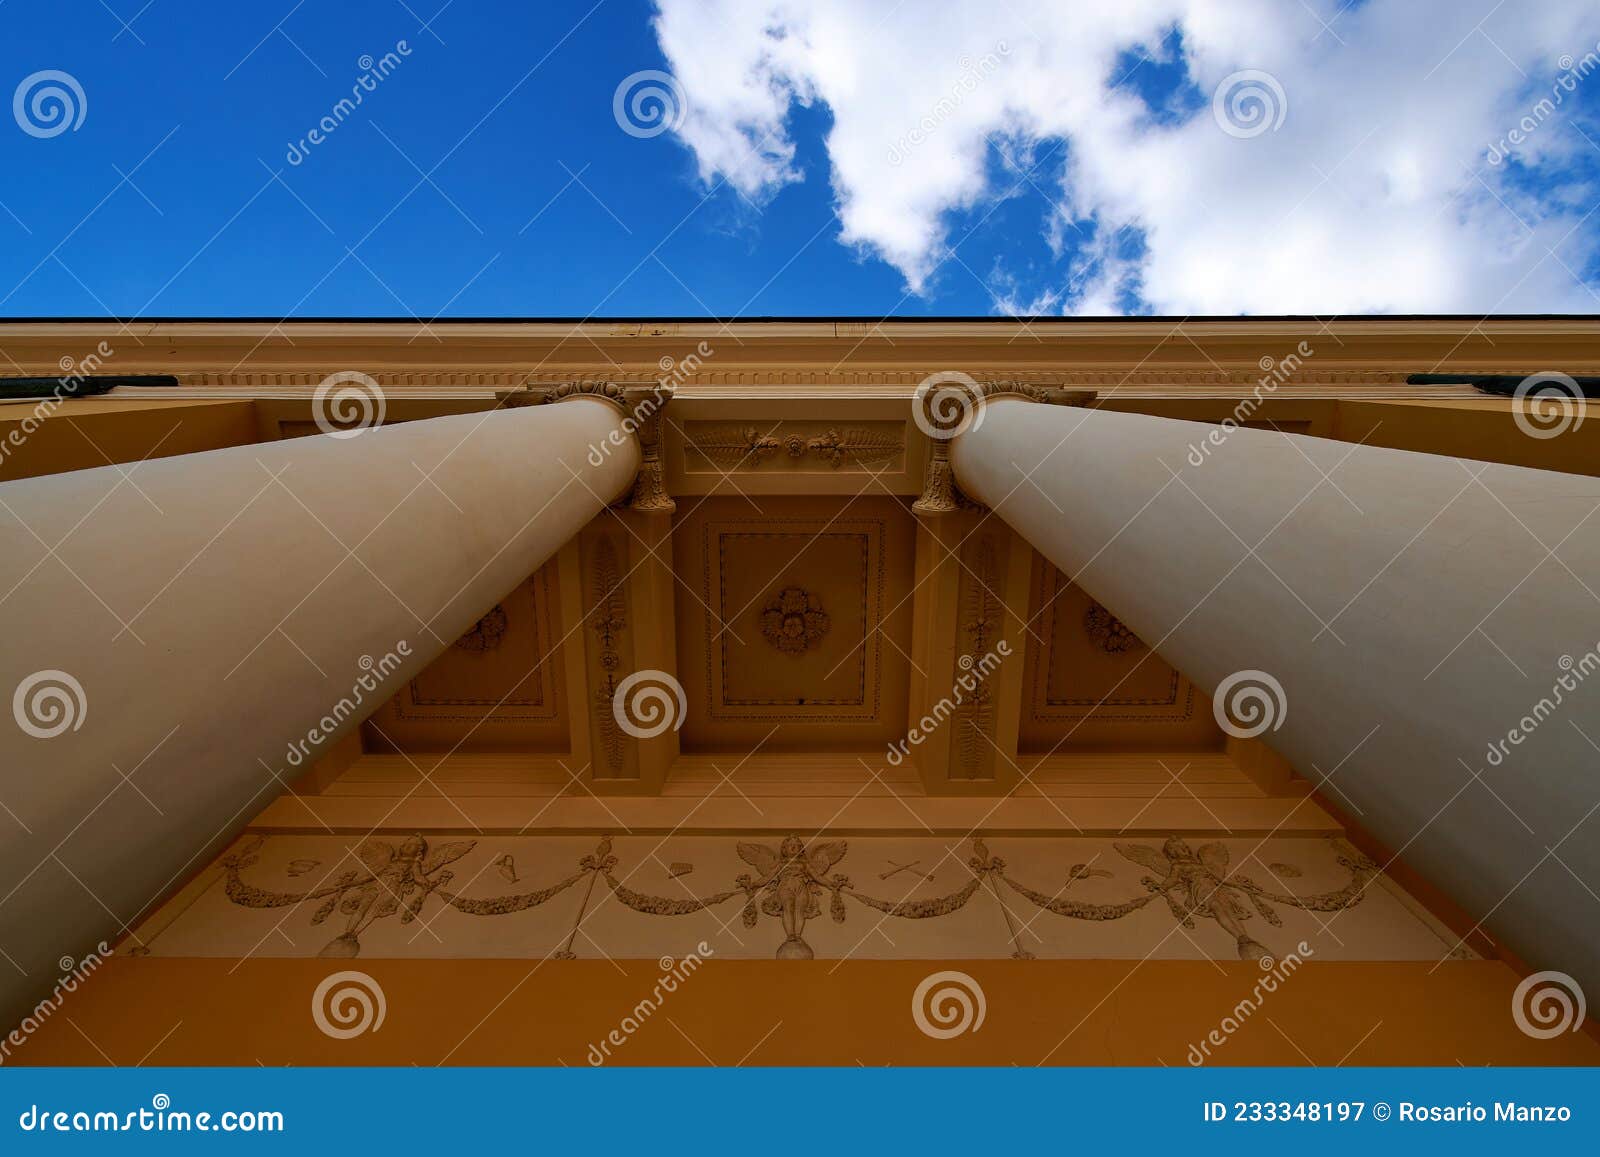 neoclassic building columns